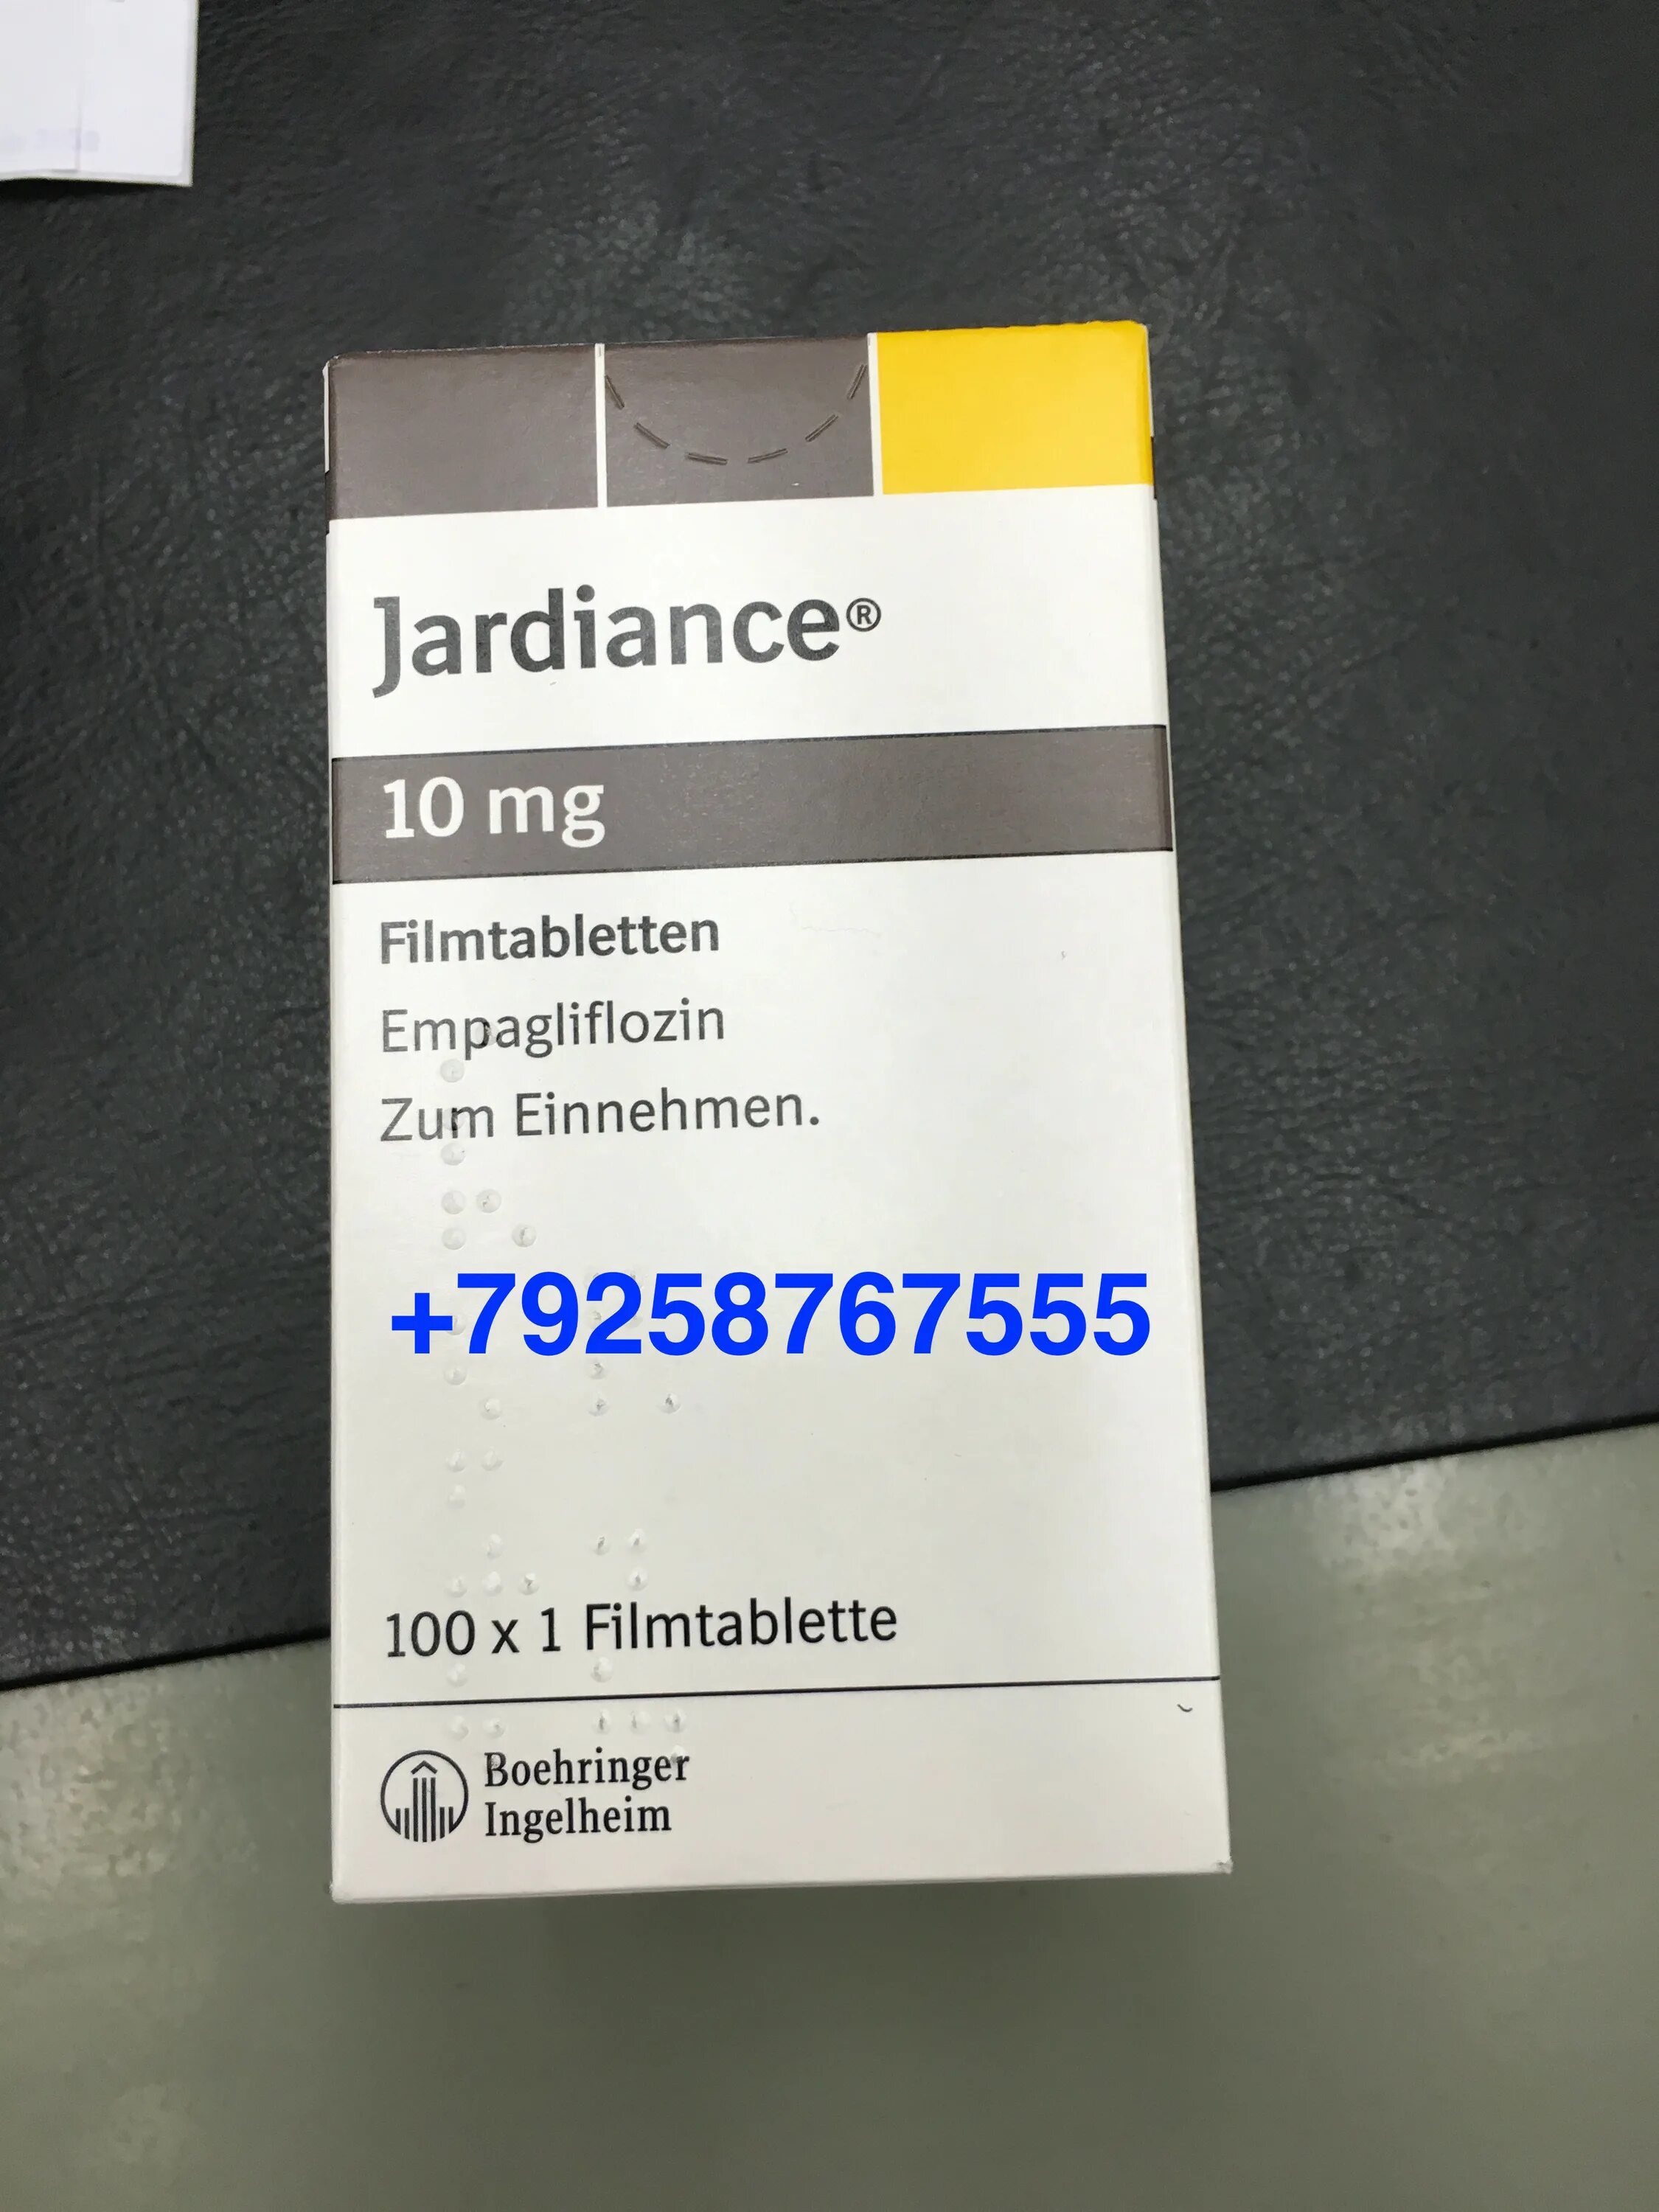 Таблетки Джардинс 25 мг. Эмпаглифлозин Джардинс 25 мг. Таблетки Джардинс 10 мг. Джардинс 25мг 30т.